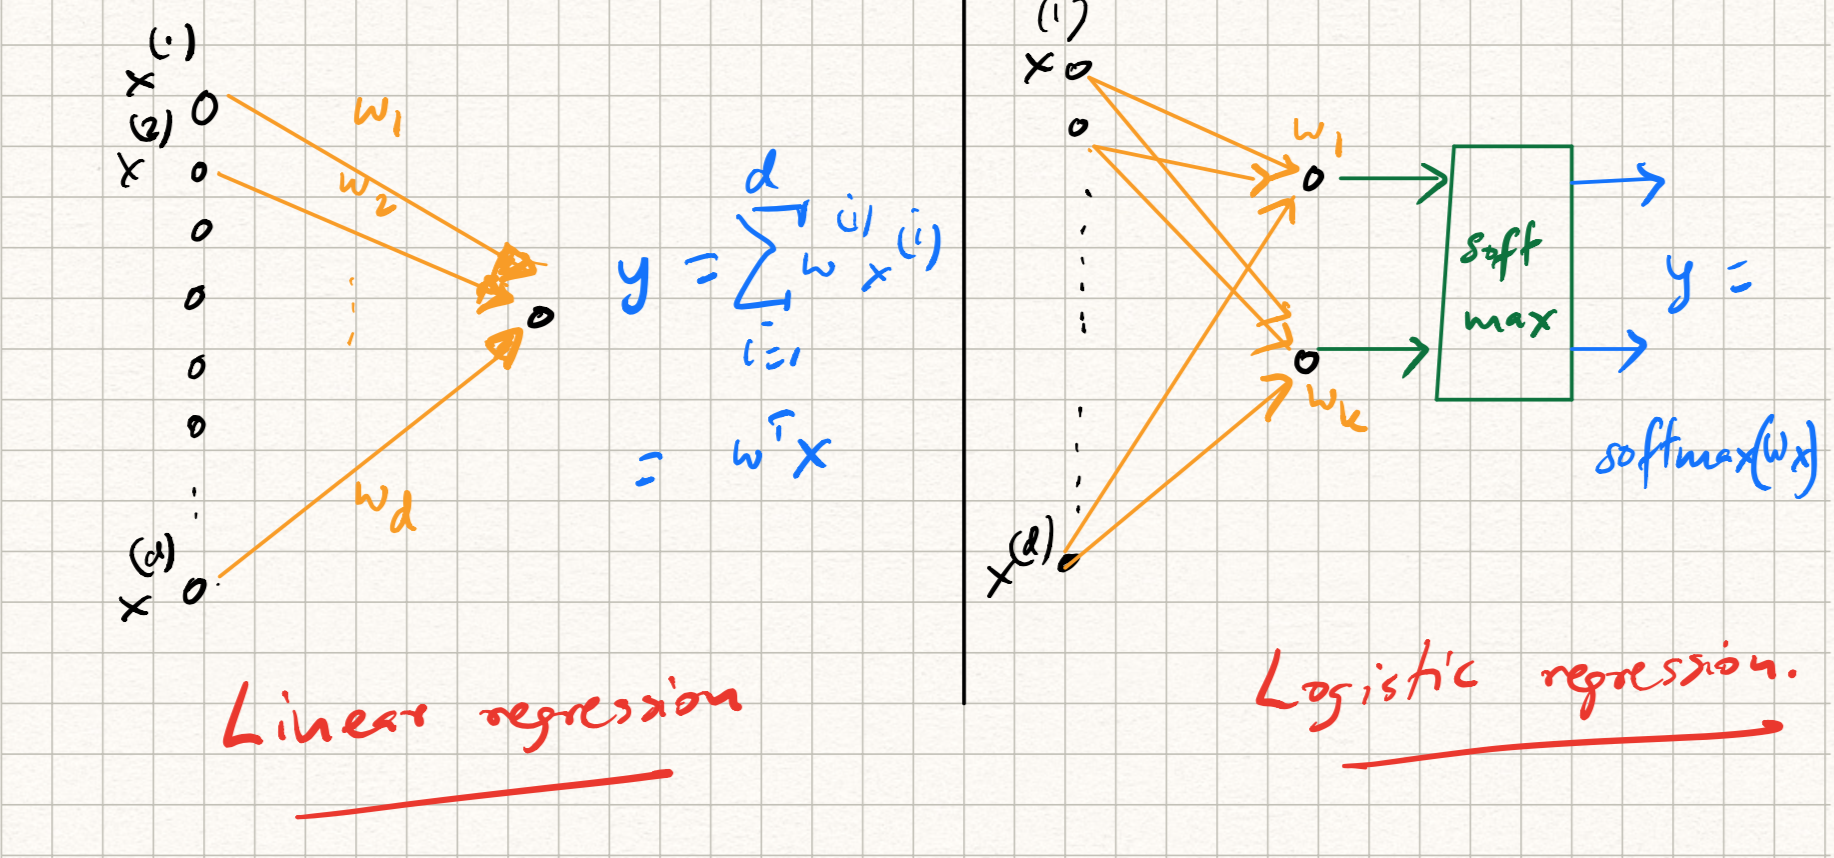 Linear and logistic regression: a network interpretation